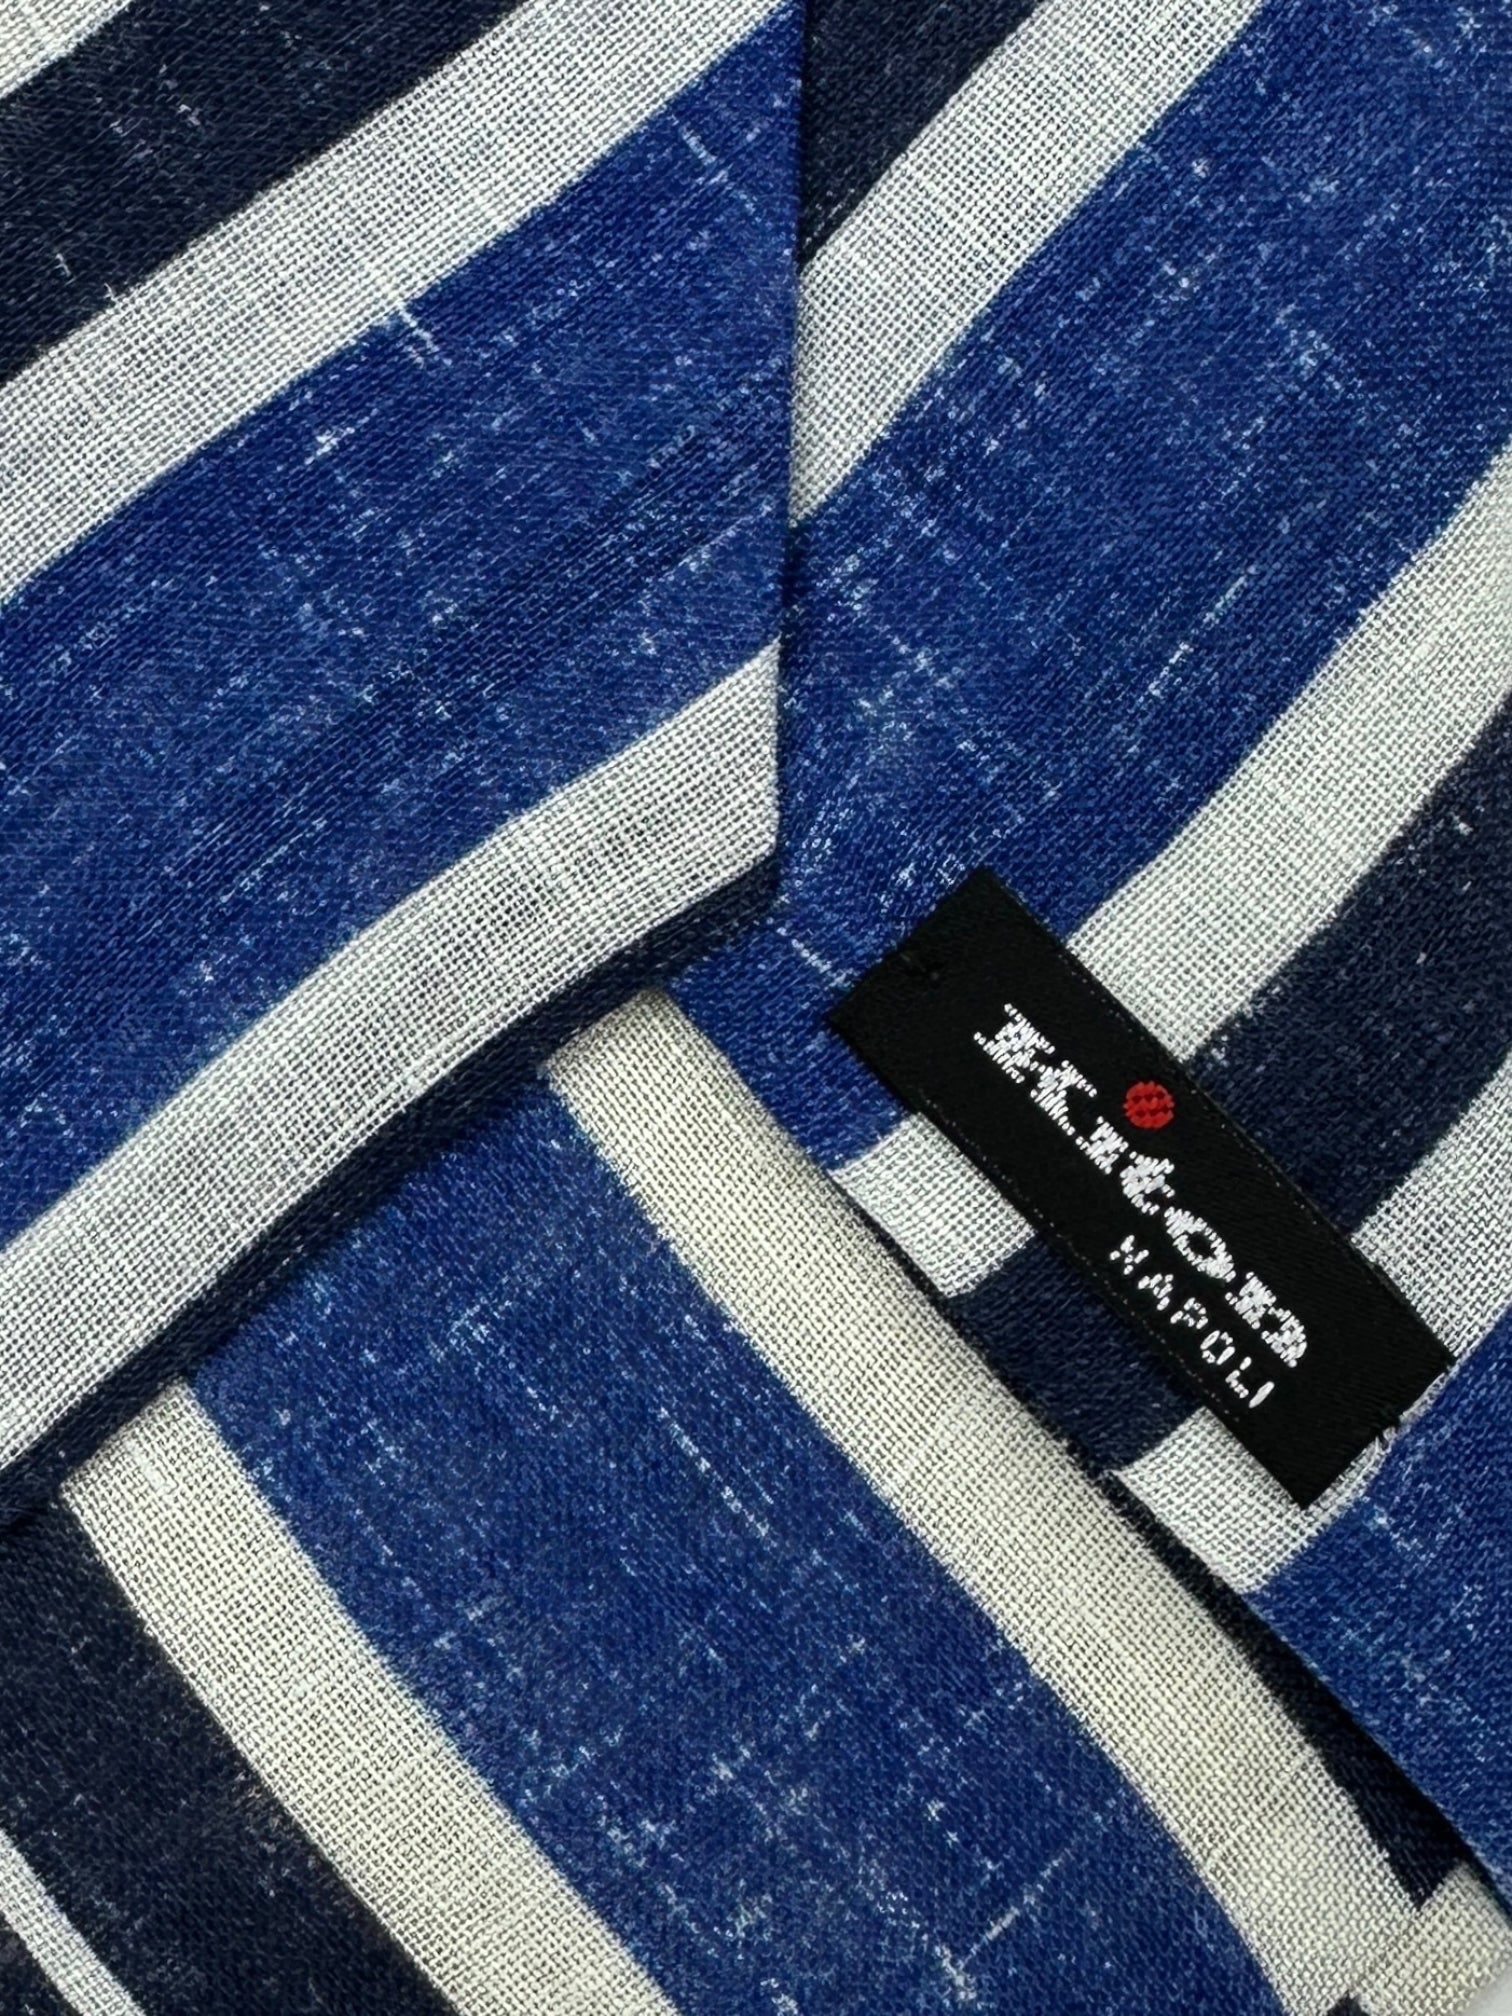 Kiton 7-Fold Blue Club Striped Linen Tie